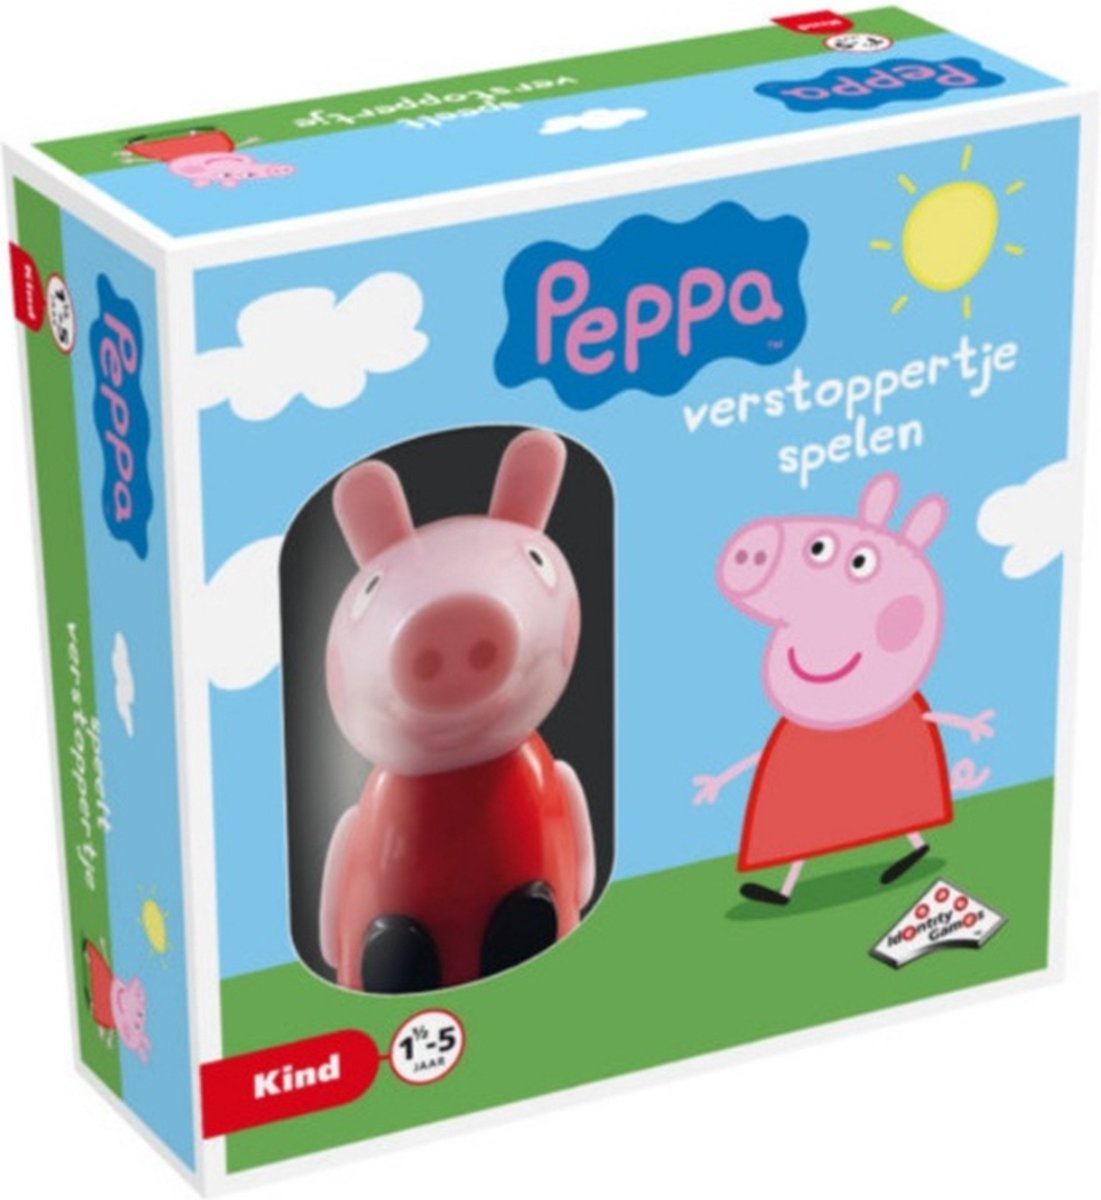 Peppa Pig verstoppertje spelen